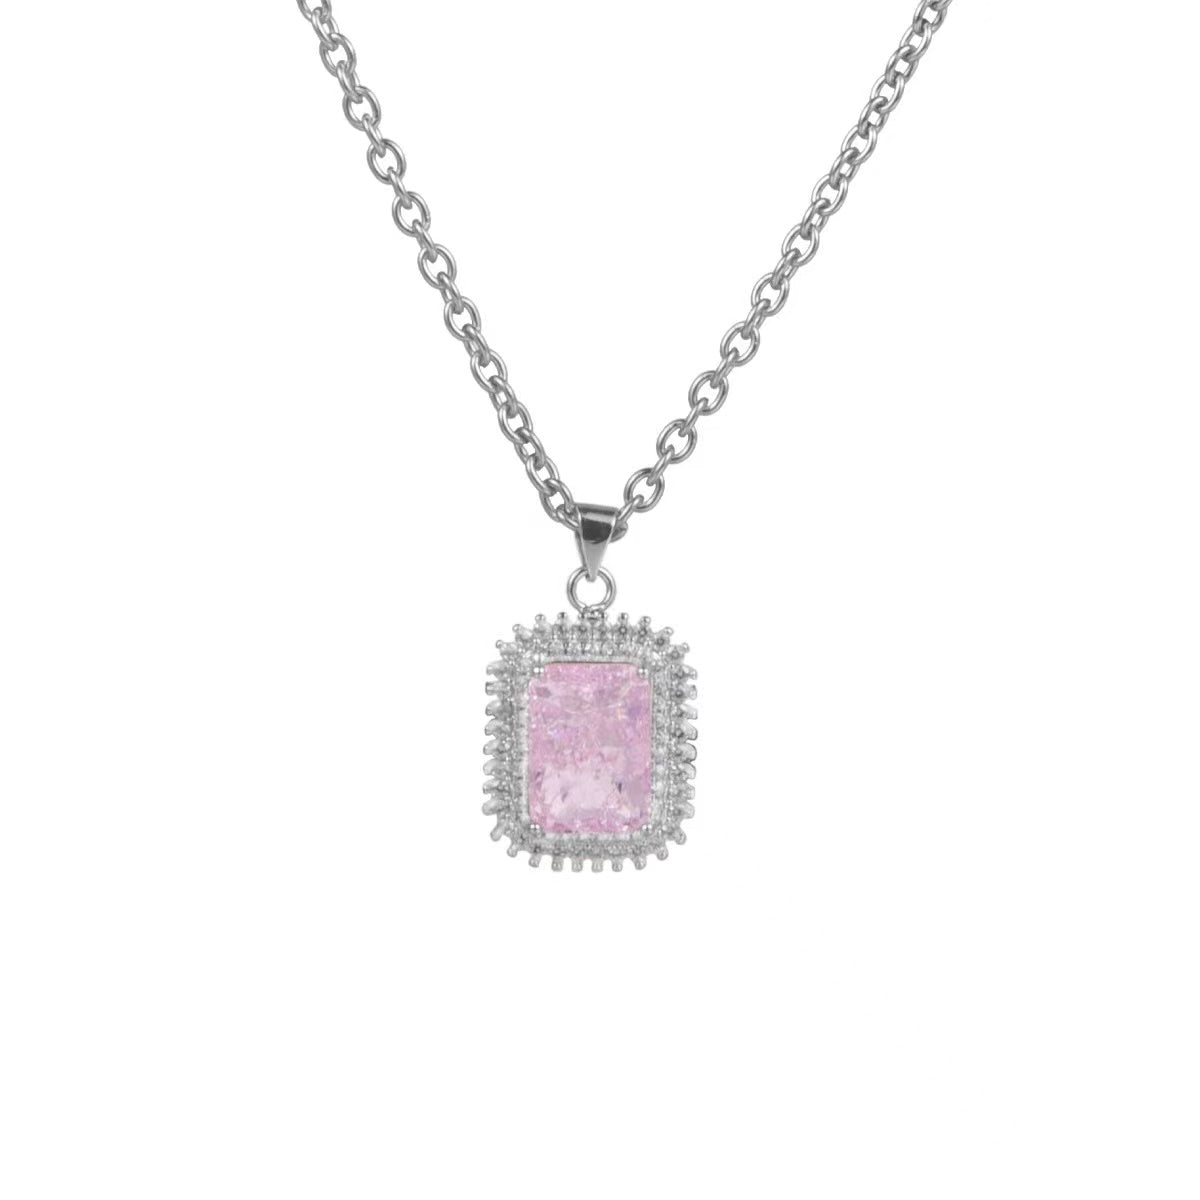 N10 Pink Crystal/Zirconia Pendant Necklace